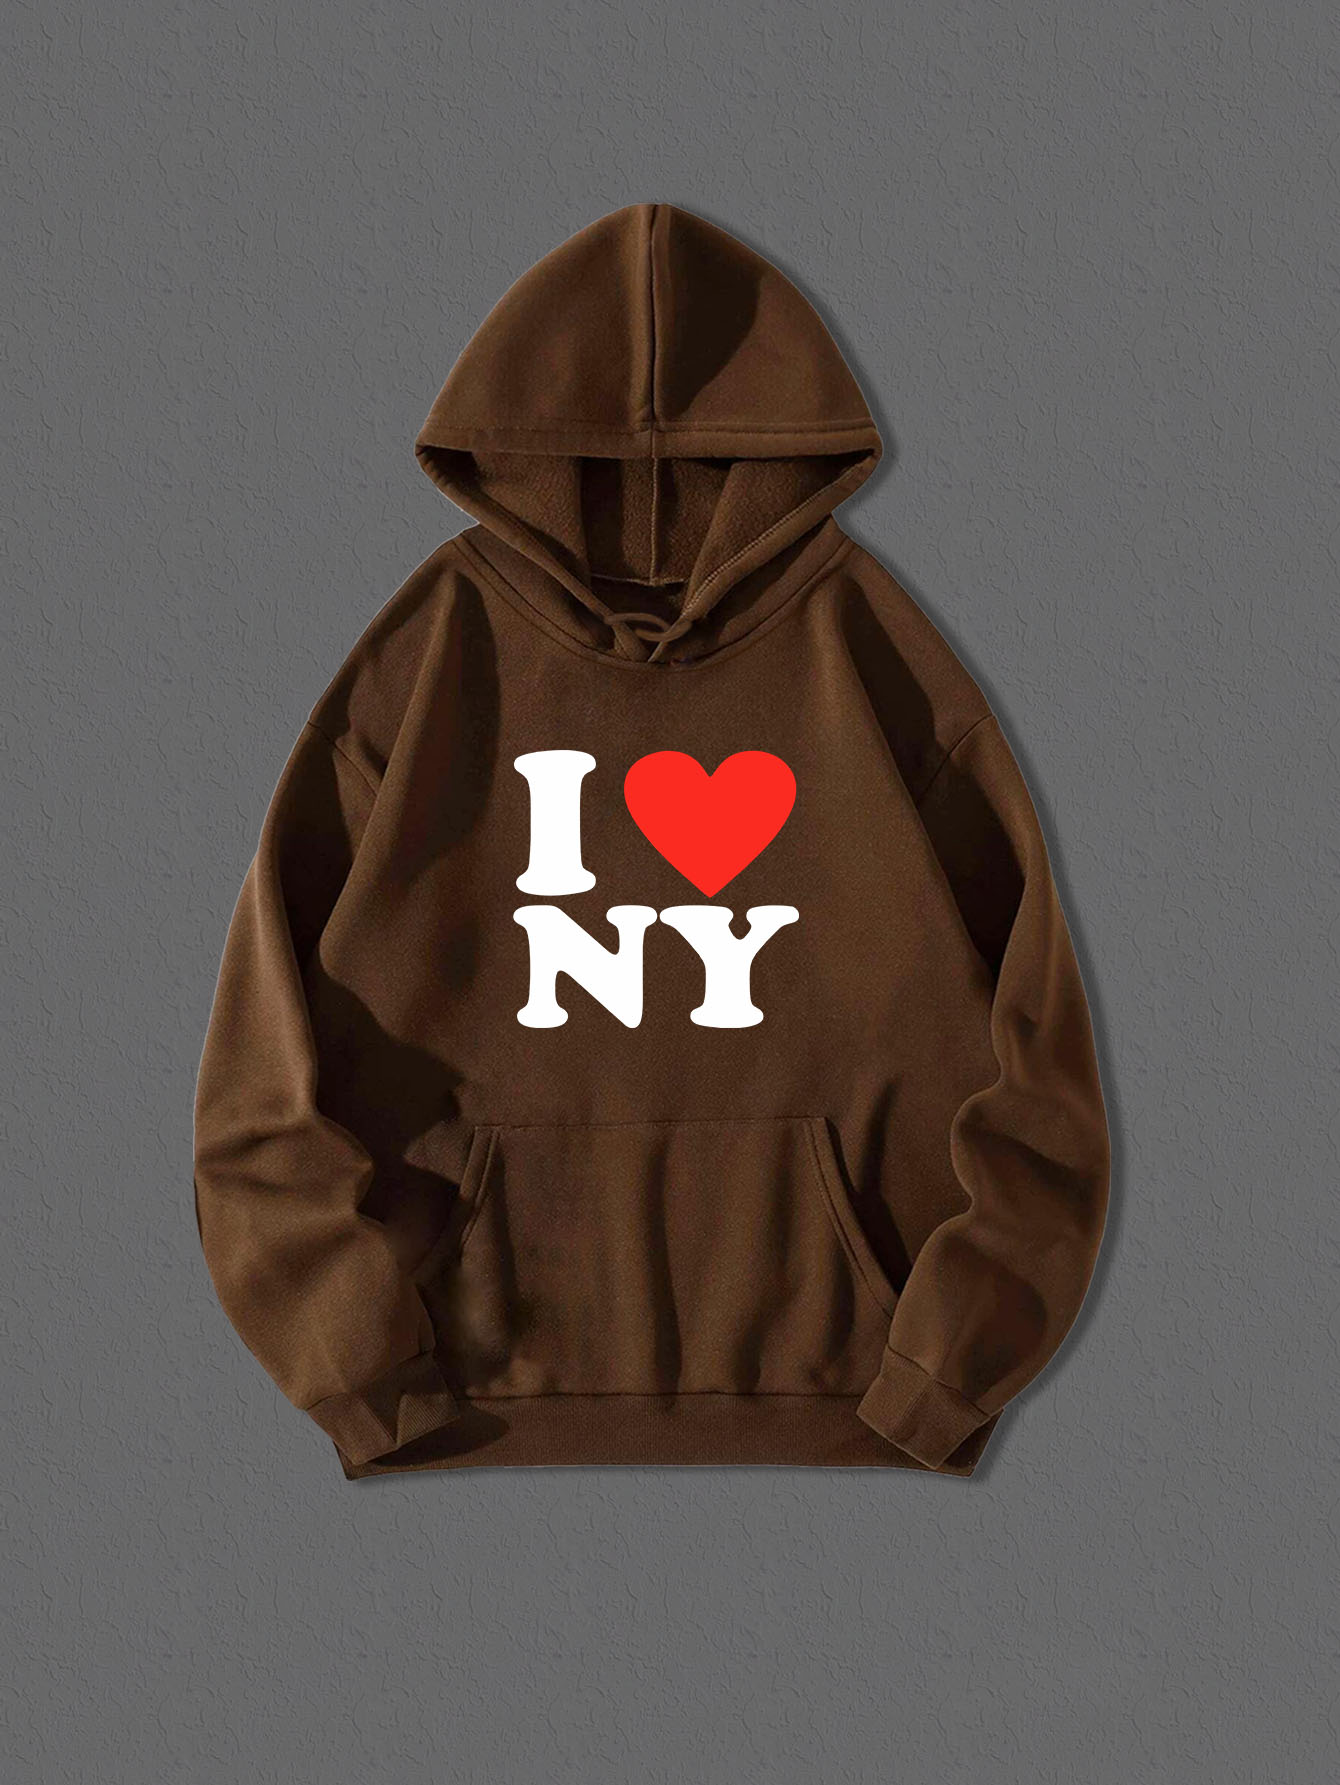 l love NY Sweatshirts — Gift-Man